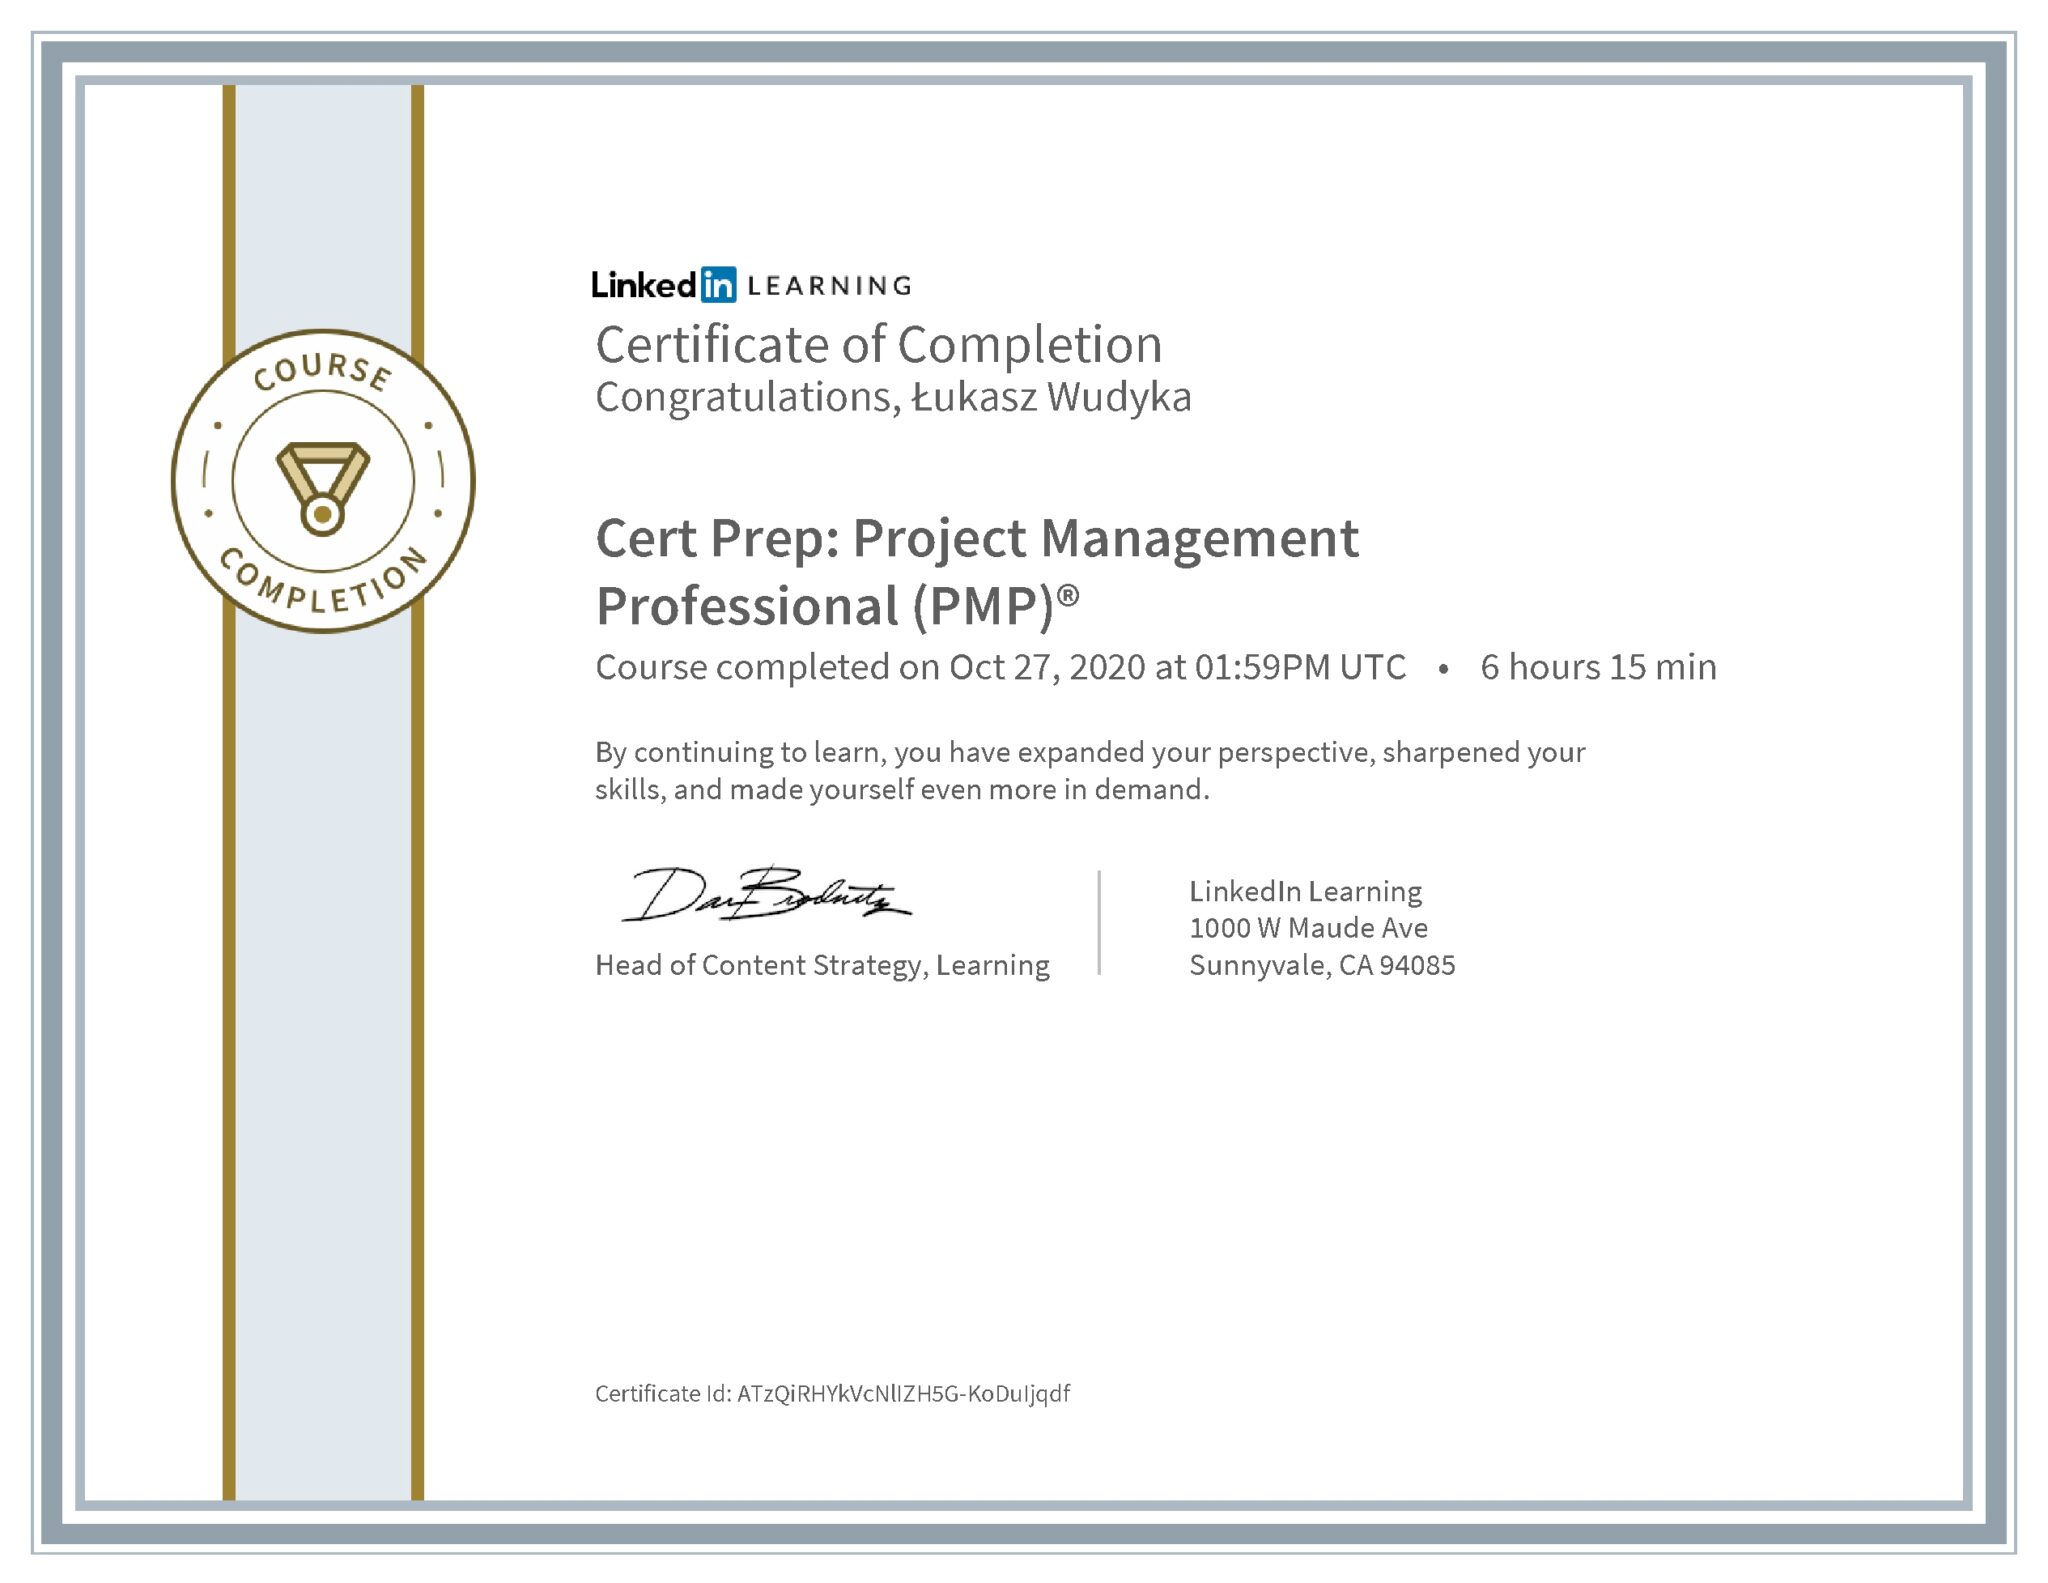 Łukasz Wudyka certyfikat LinkedIn Cert Prep: Project Management Professional (PMP)®